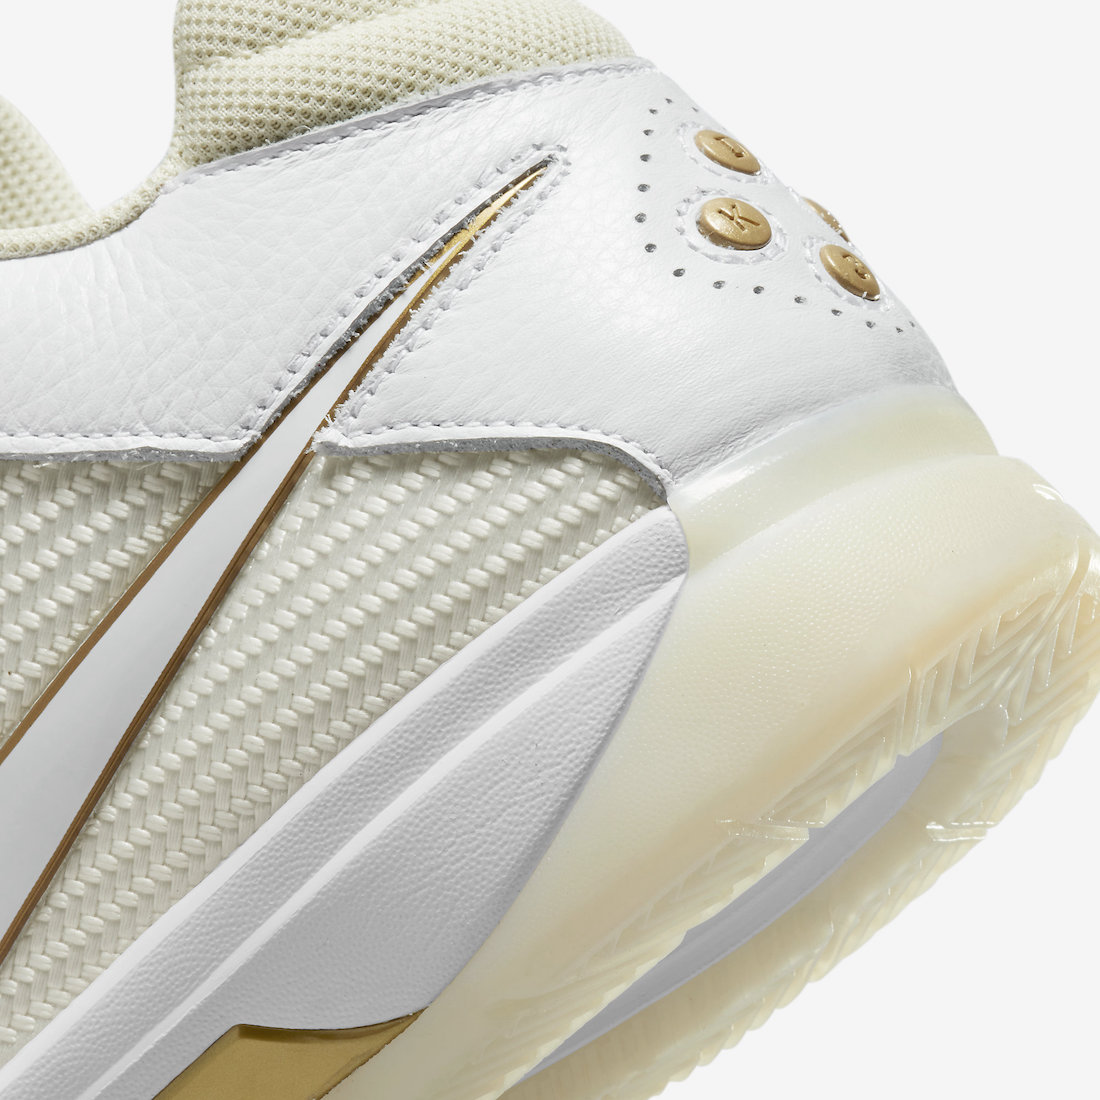 Nike KD 3 White Gold DZ3009-100 Release Date Rear